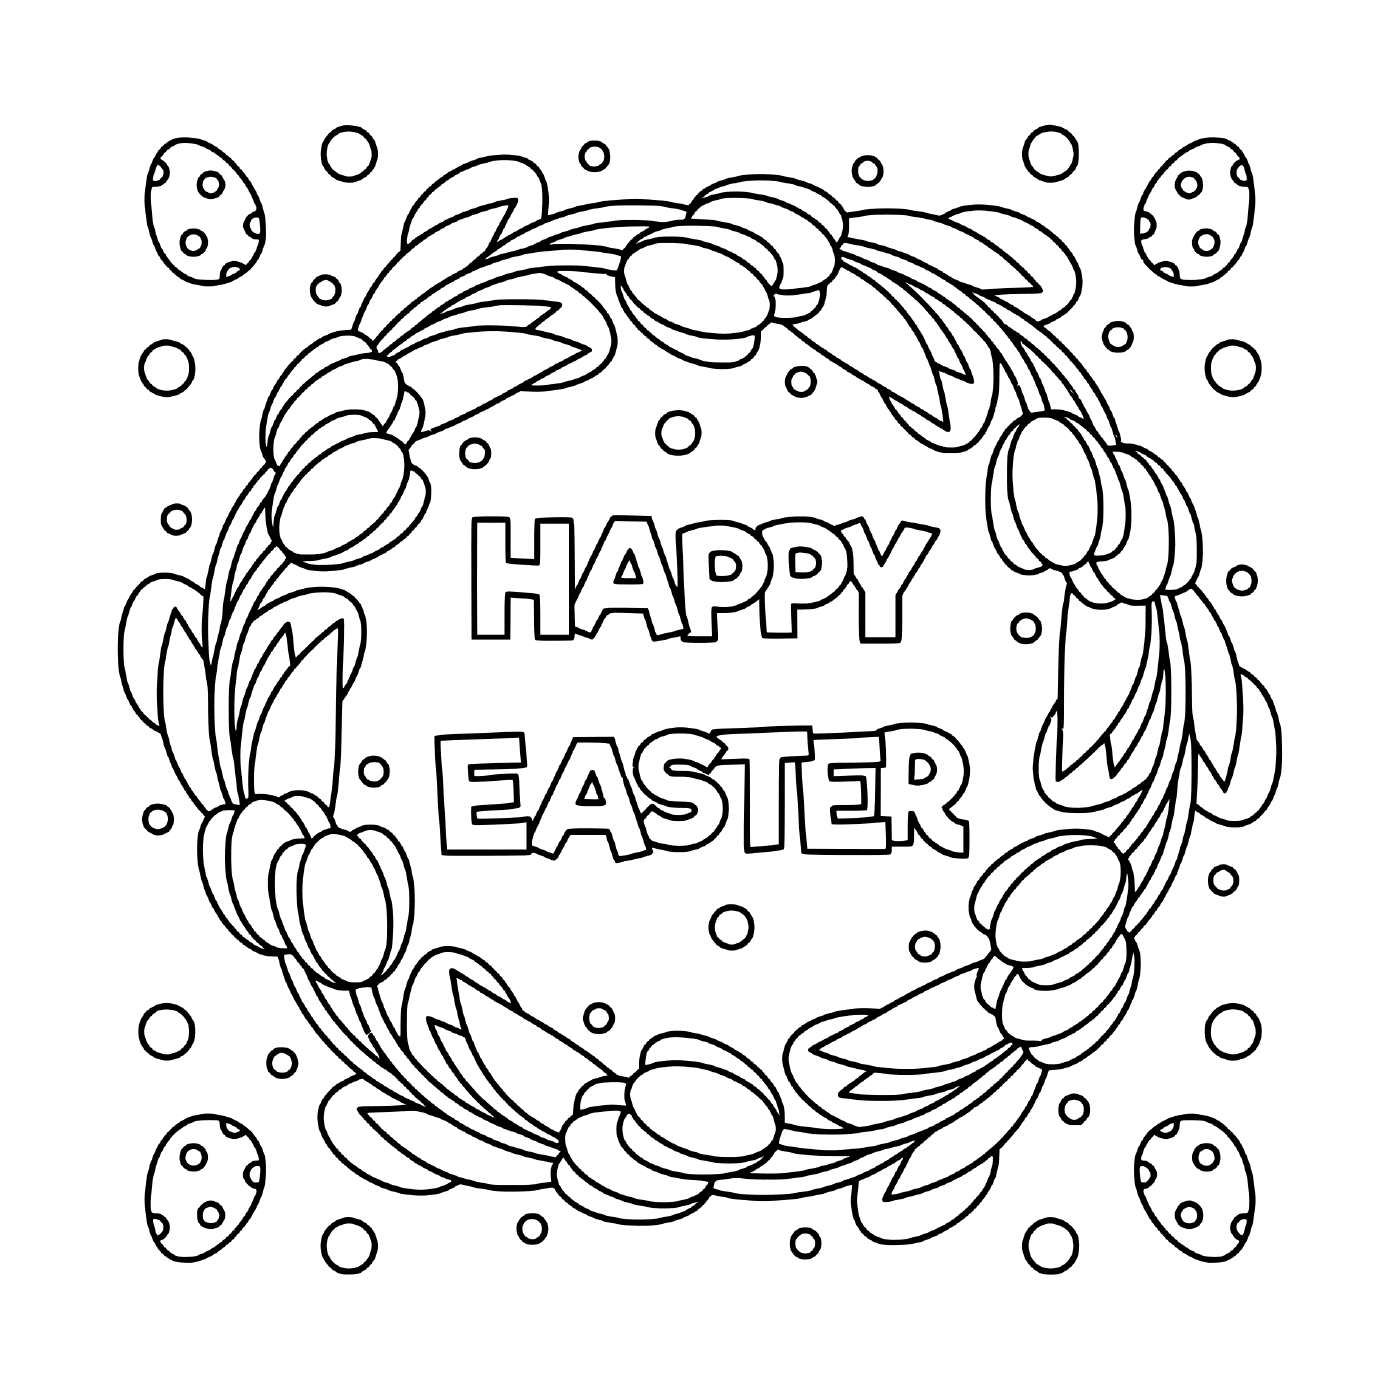  Happy Easter black and white illustration 